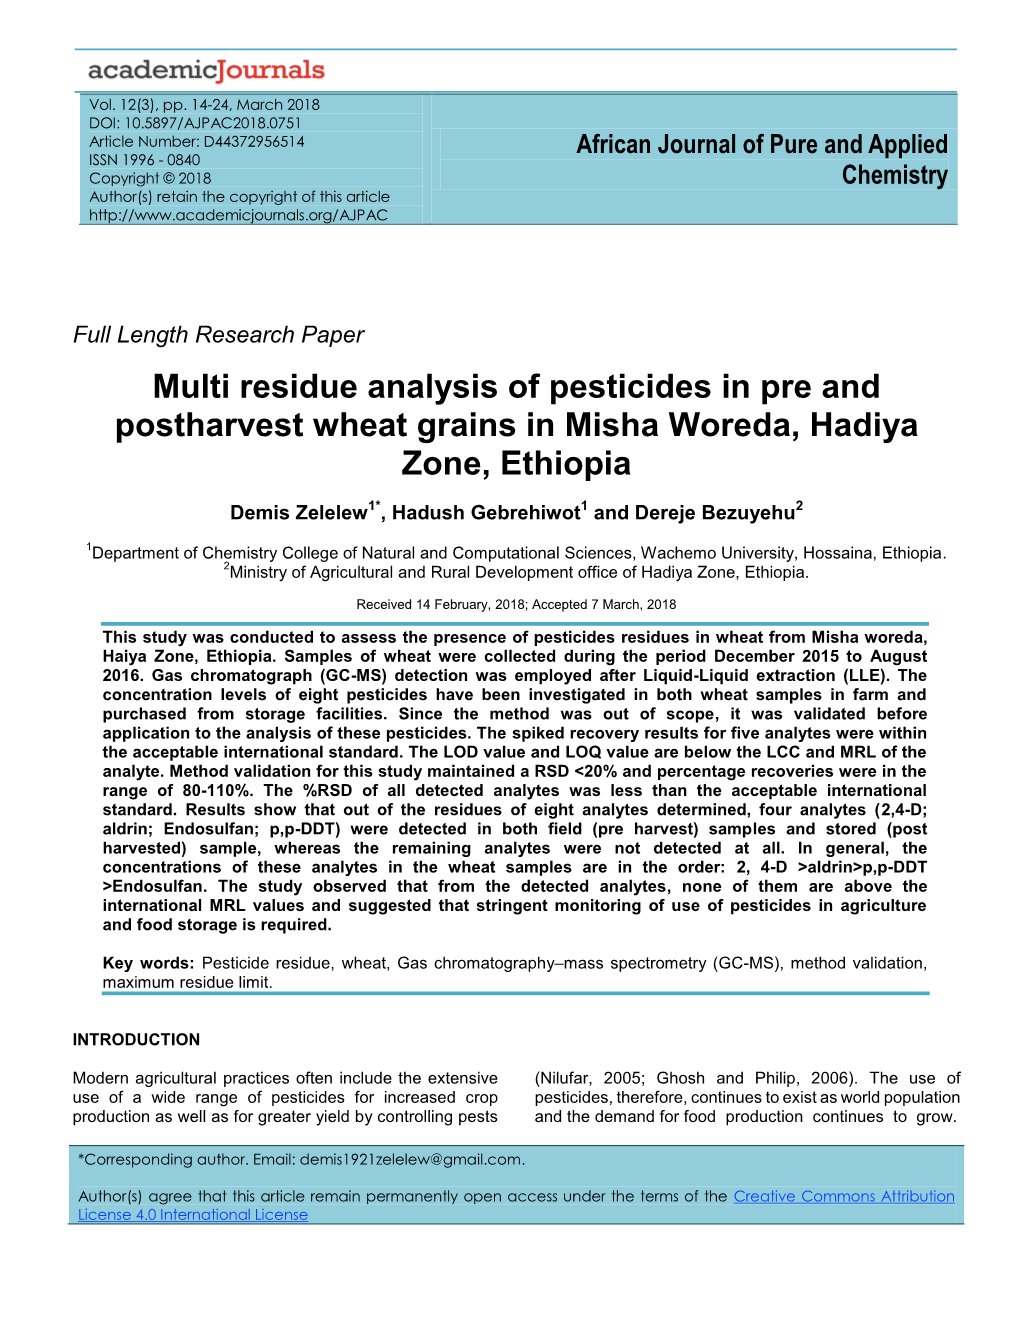 Multi Residue Analysis of Pesticides in Pre and Postharvest Wheat Grains in Misha Woreda, Hadiya Zone, Ethiopia